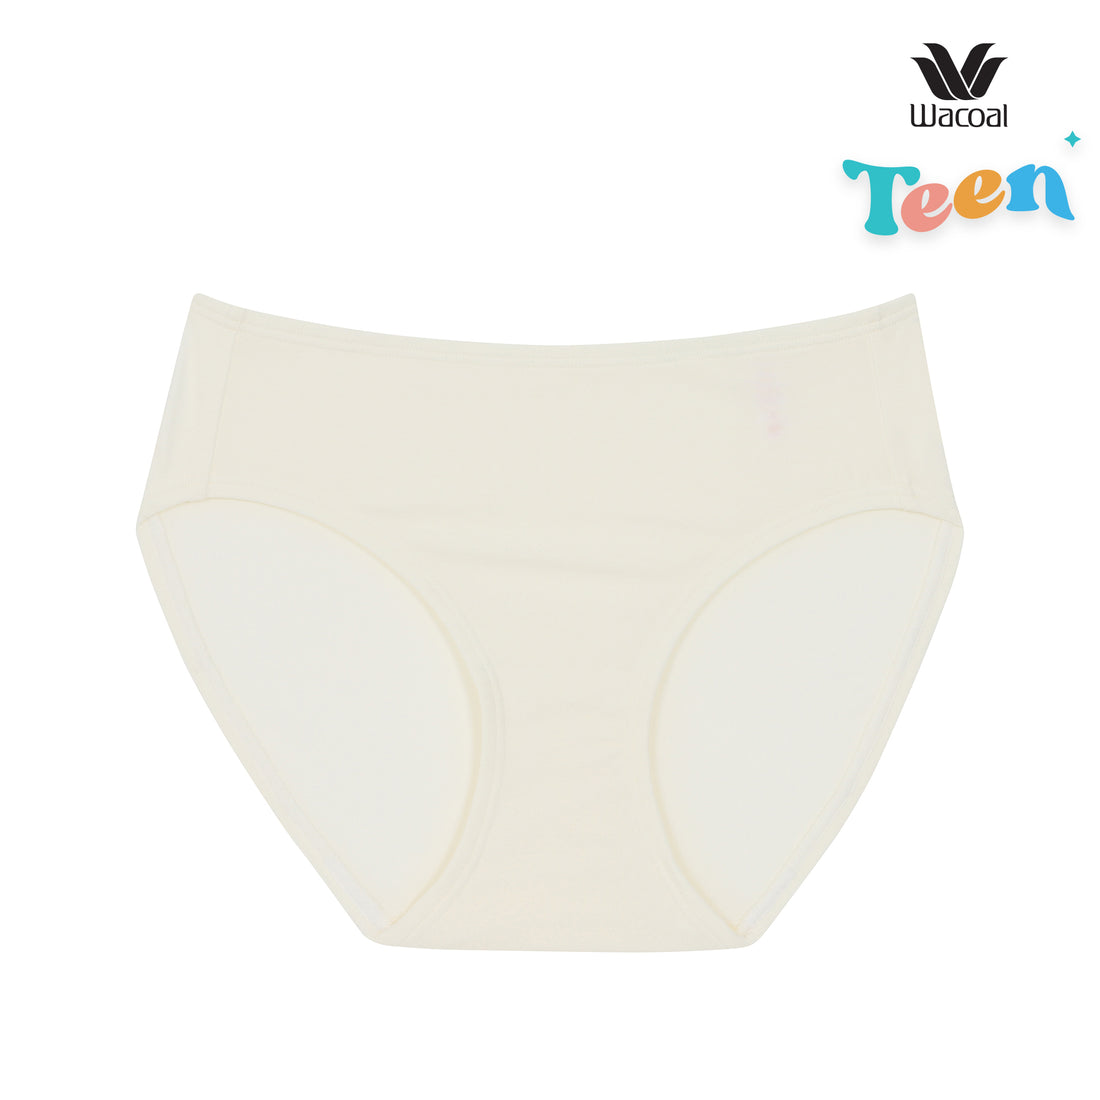 Wacoal Teen Bikini Panty กางเกงในสำหรับวัยใส รุ่น MUT302 สีครีม (CR)